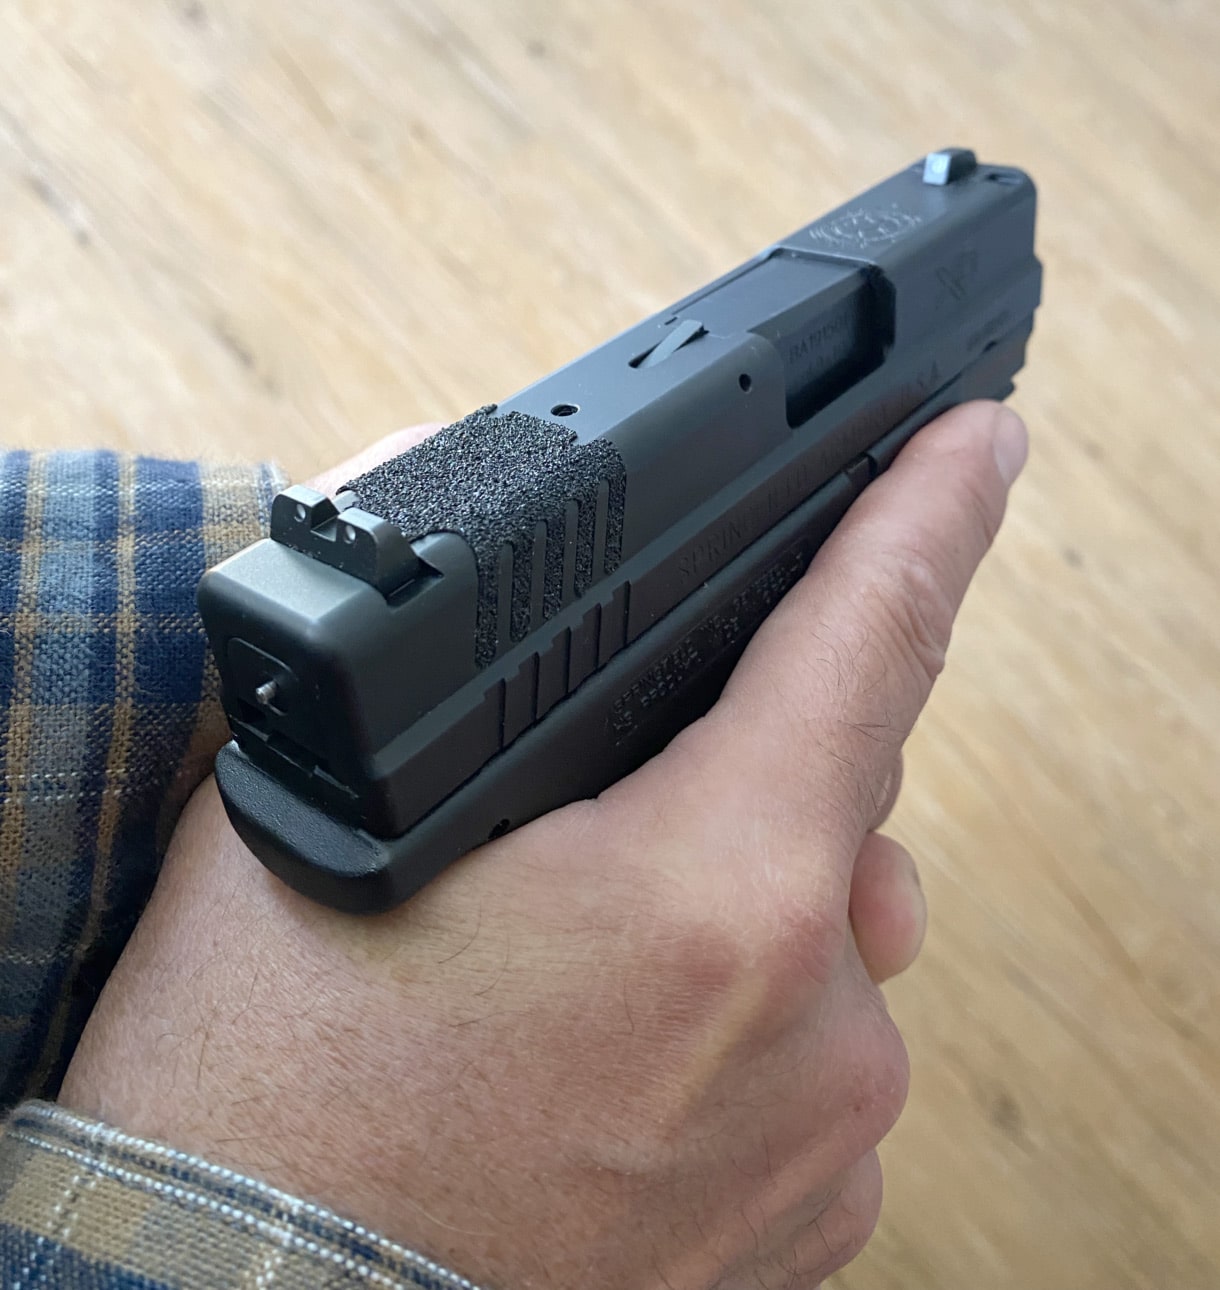 SlideSpider grip tape on Springfield XD pistol